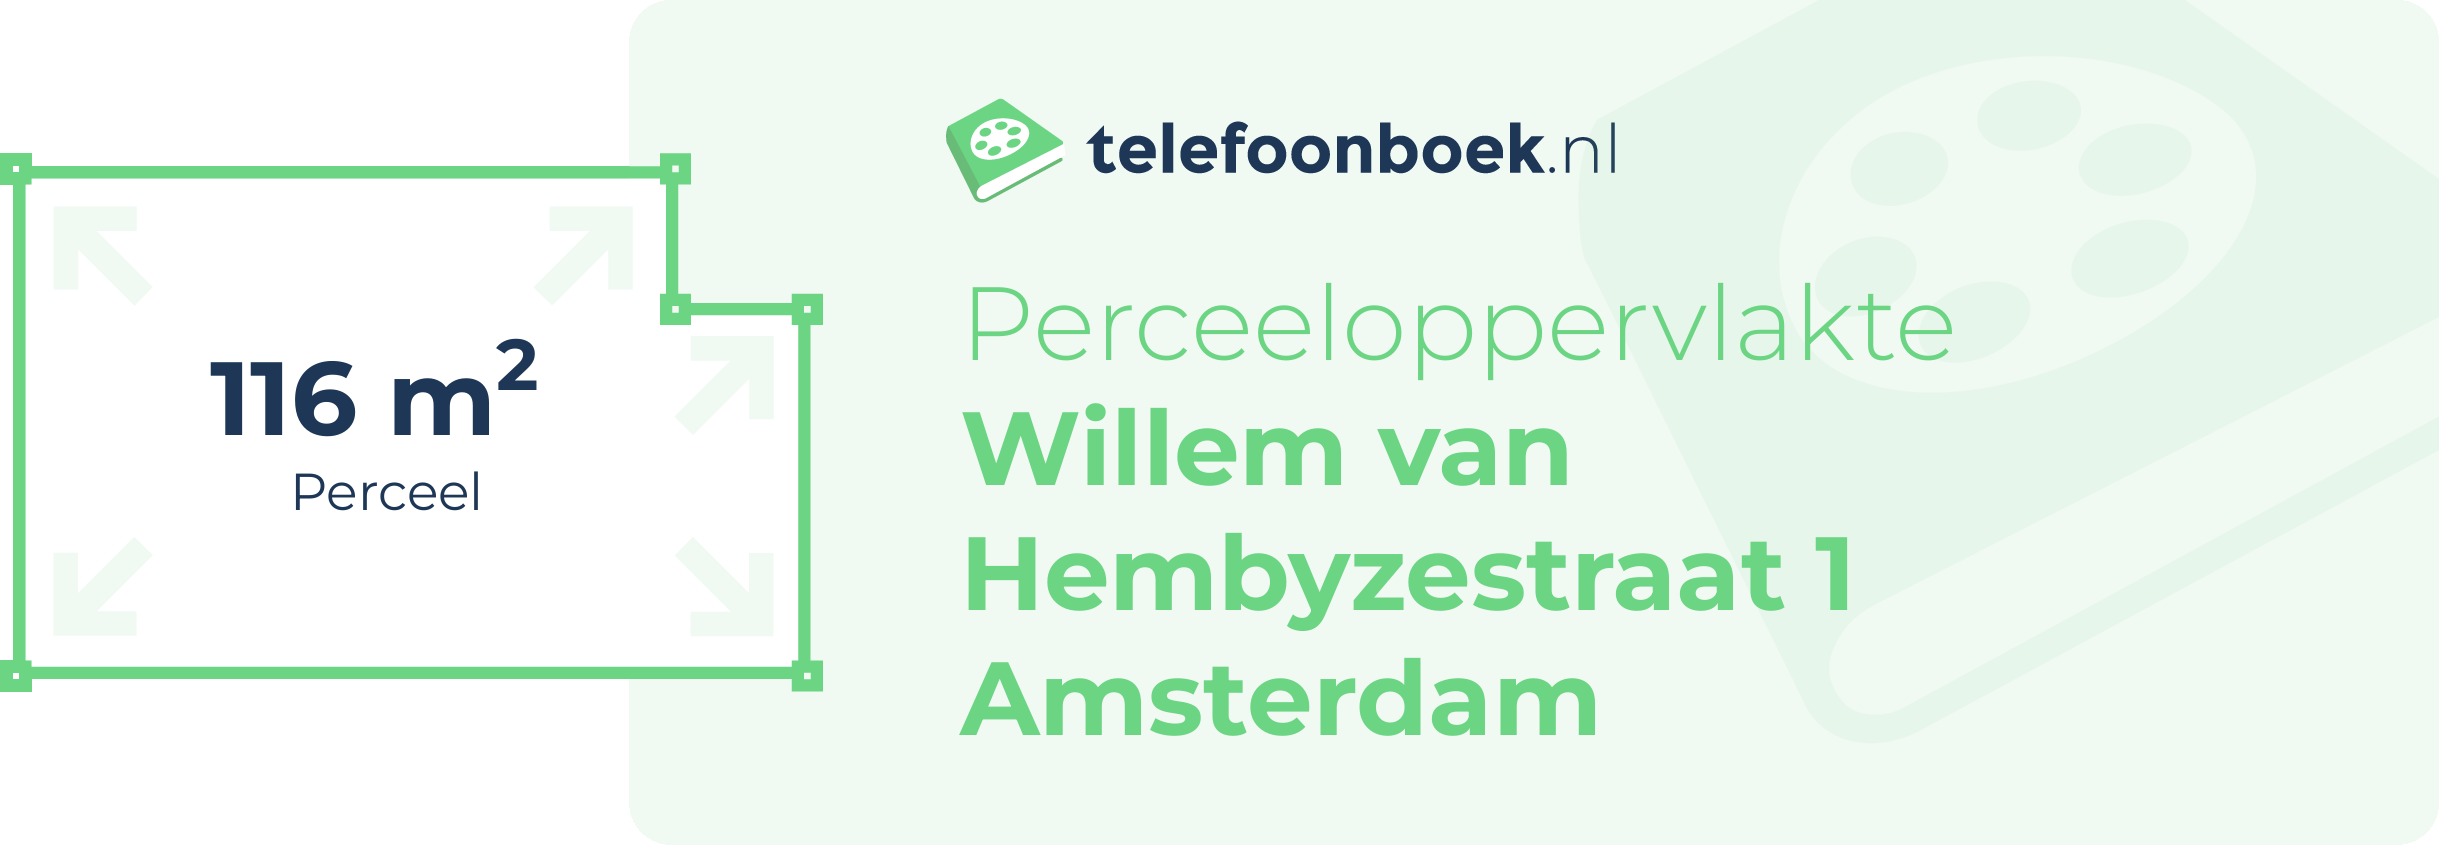 Perceeloppervlakte Willem Van Hembyzestraat 1 Amsterdam